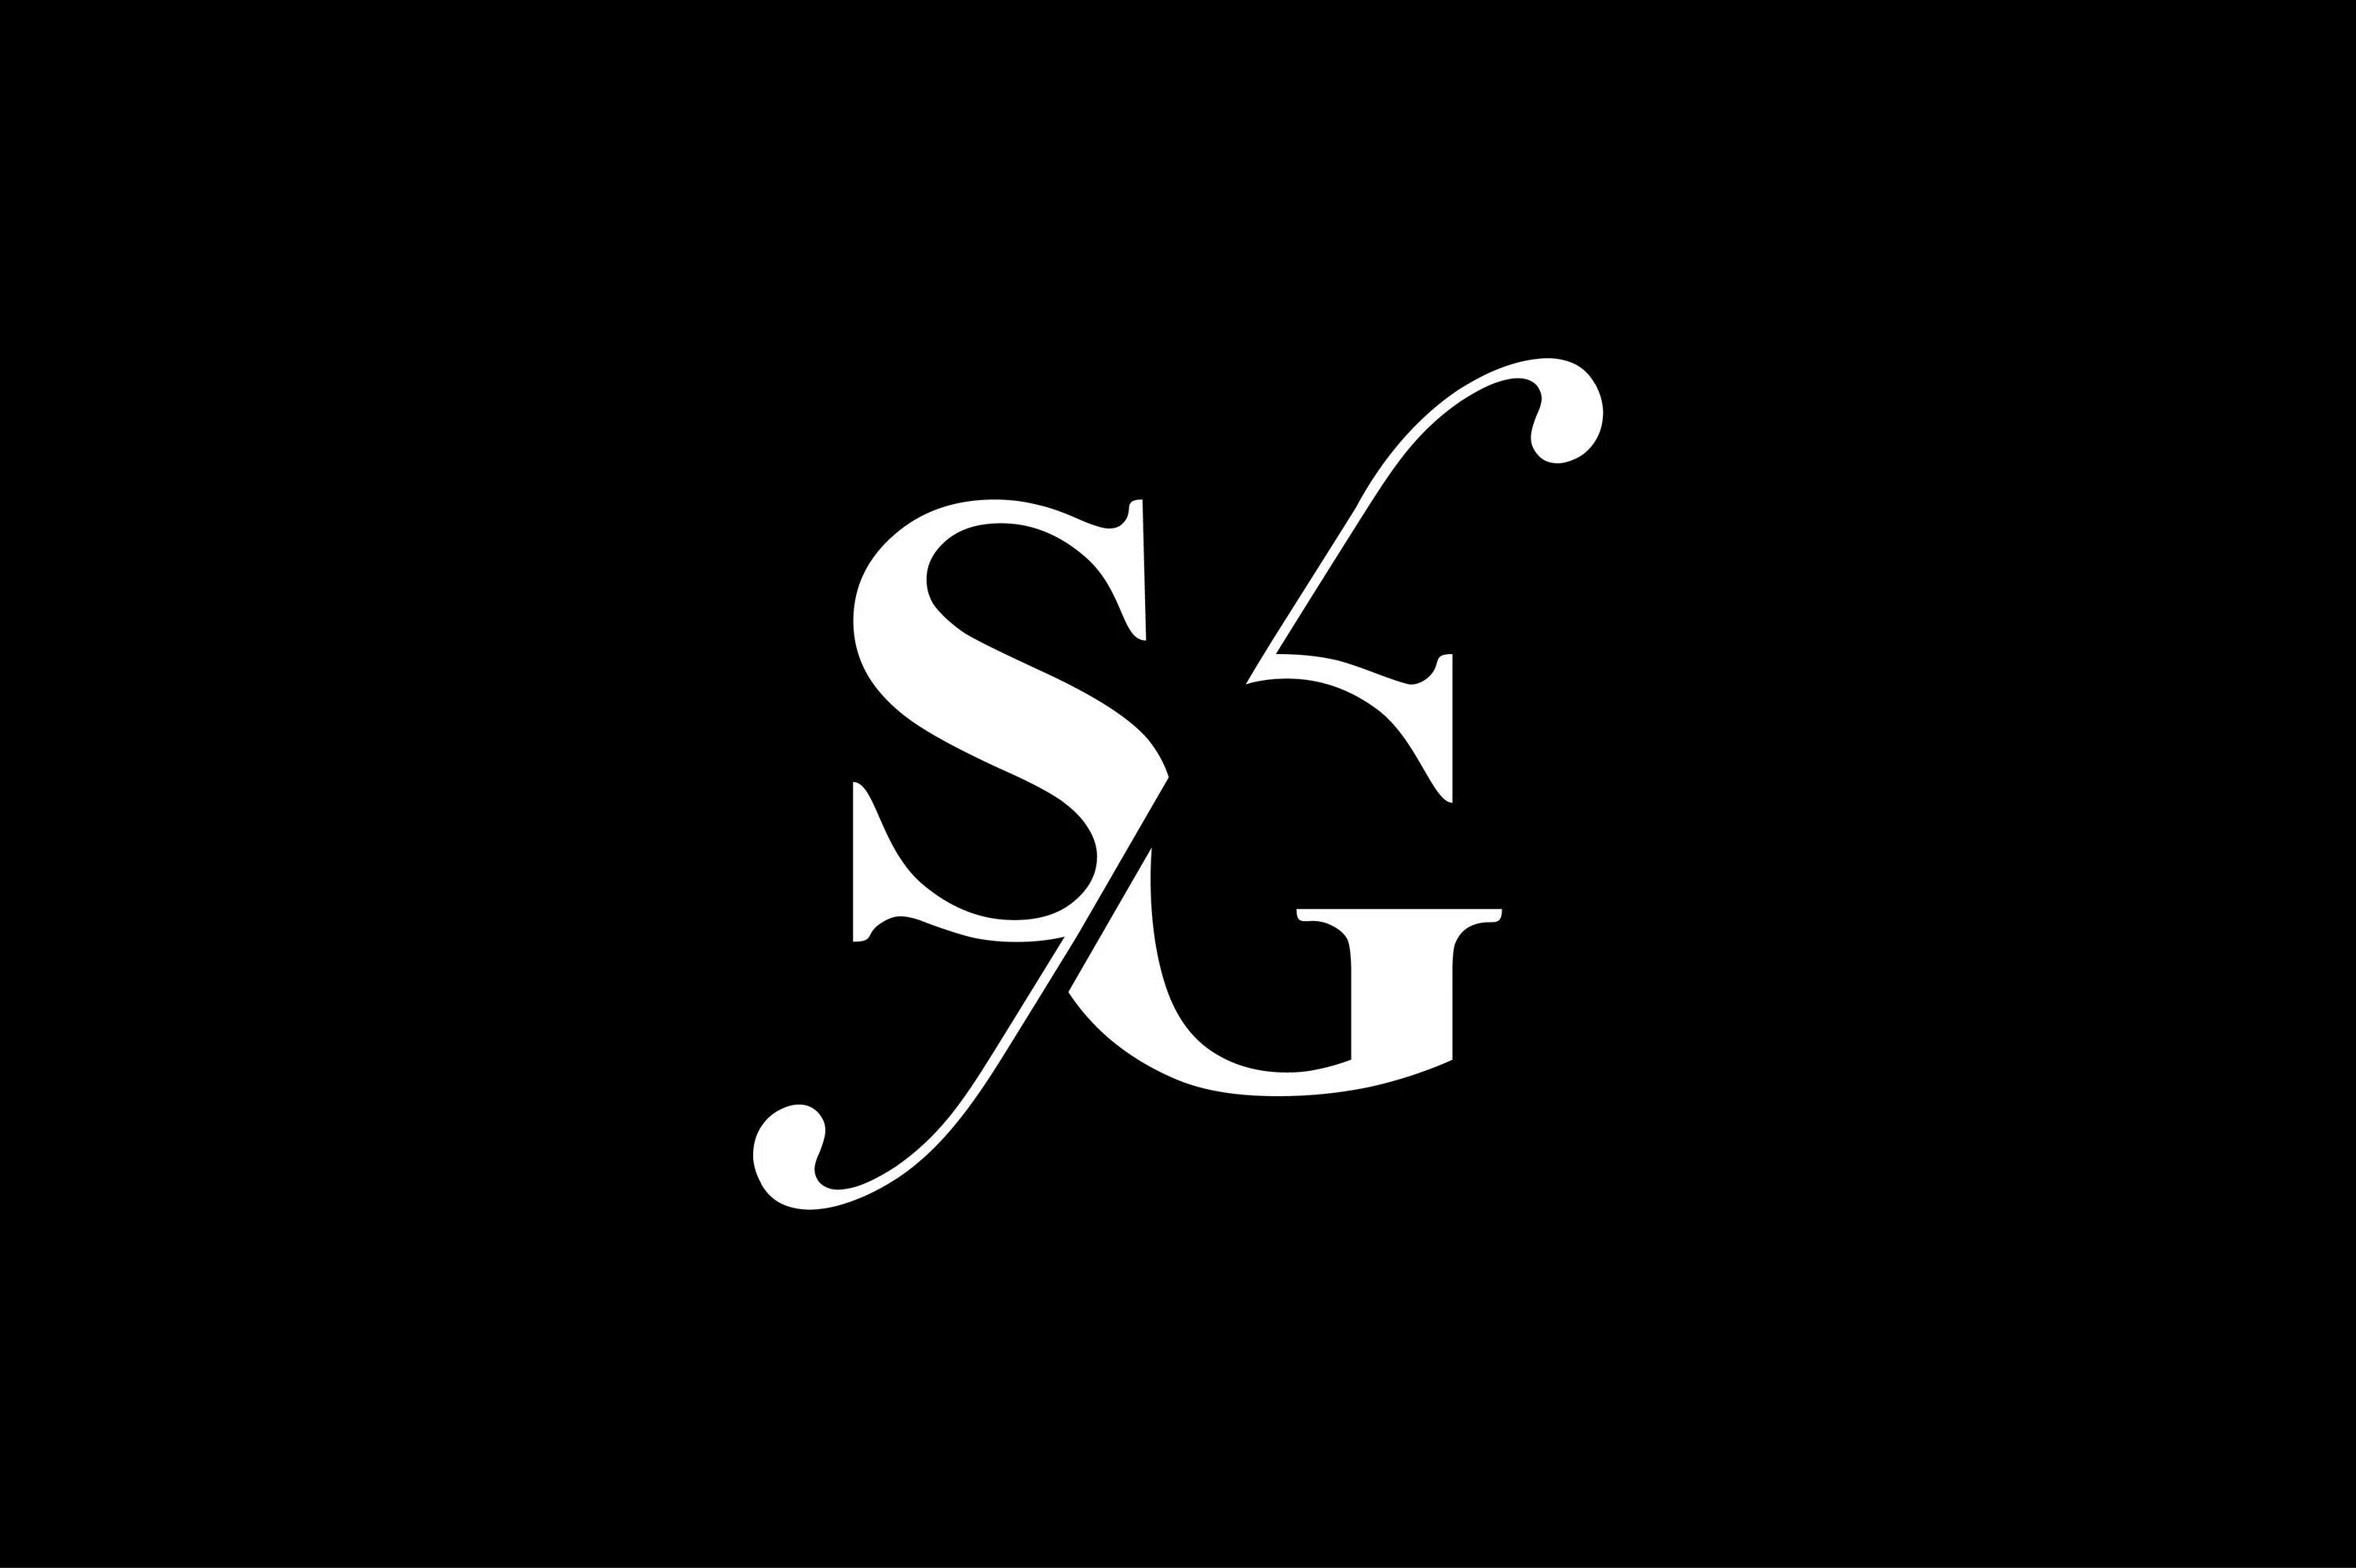 G s up. SG логотип. Картинки SG. Лого с буквами SG. Монограмма g s.